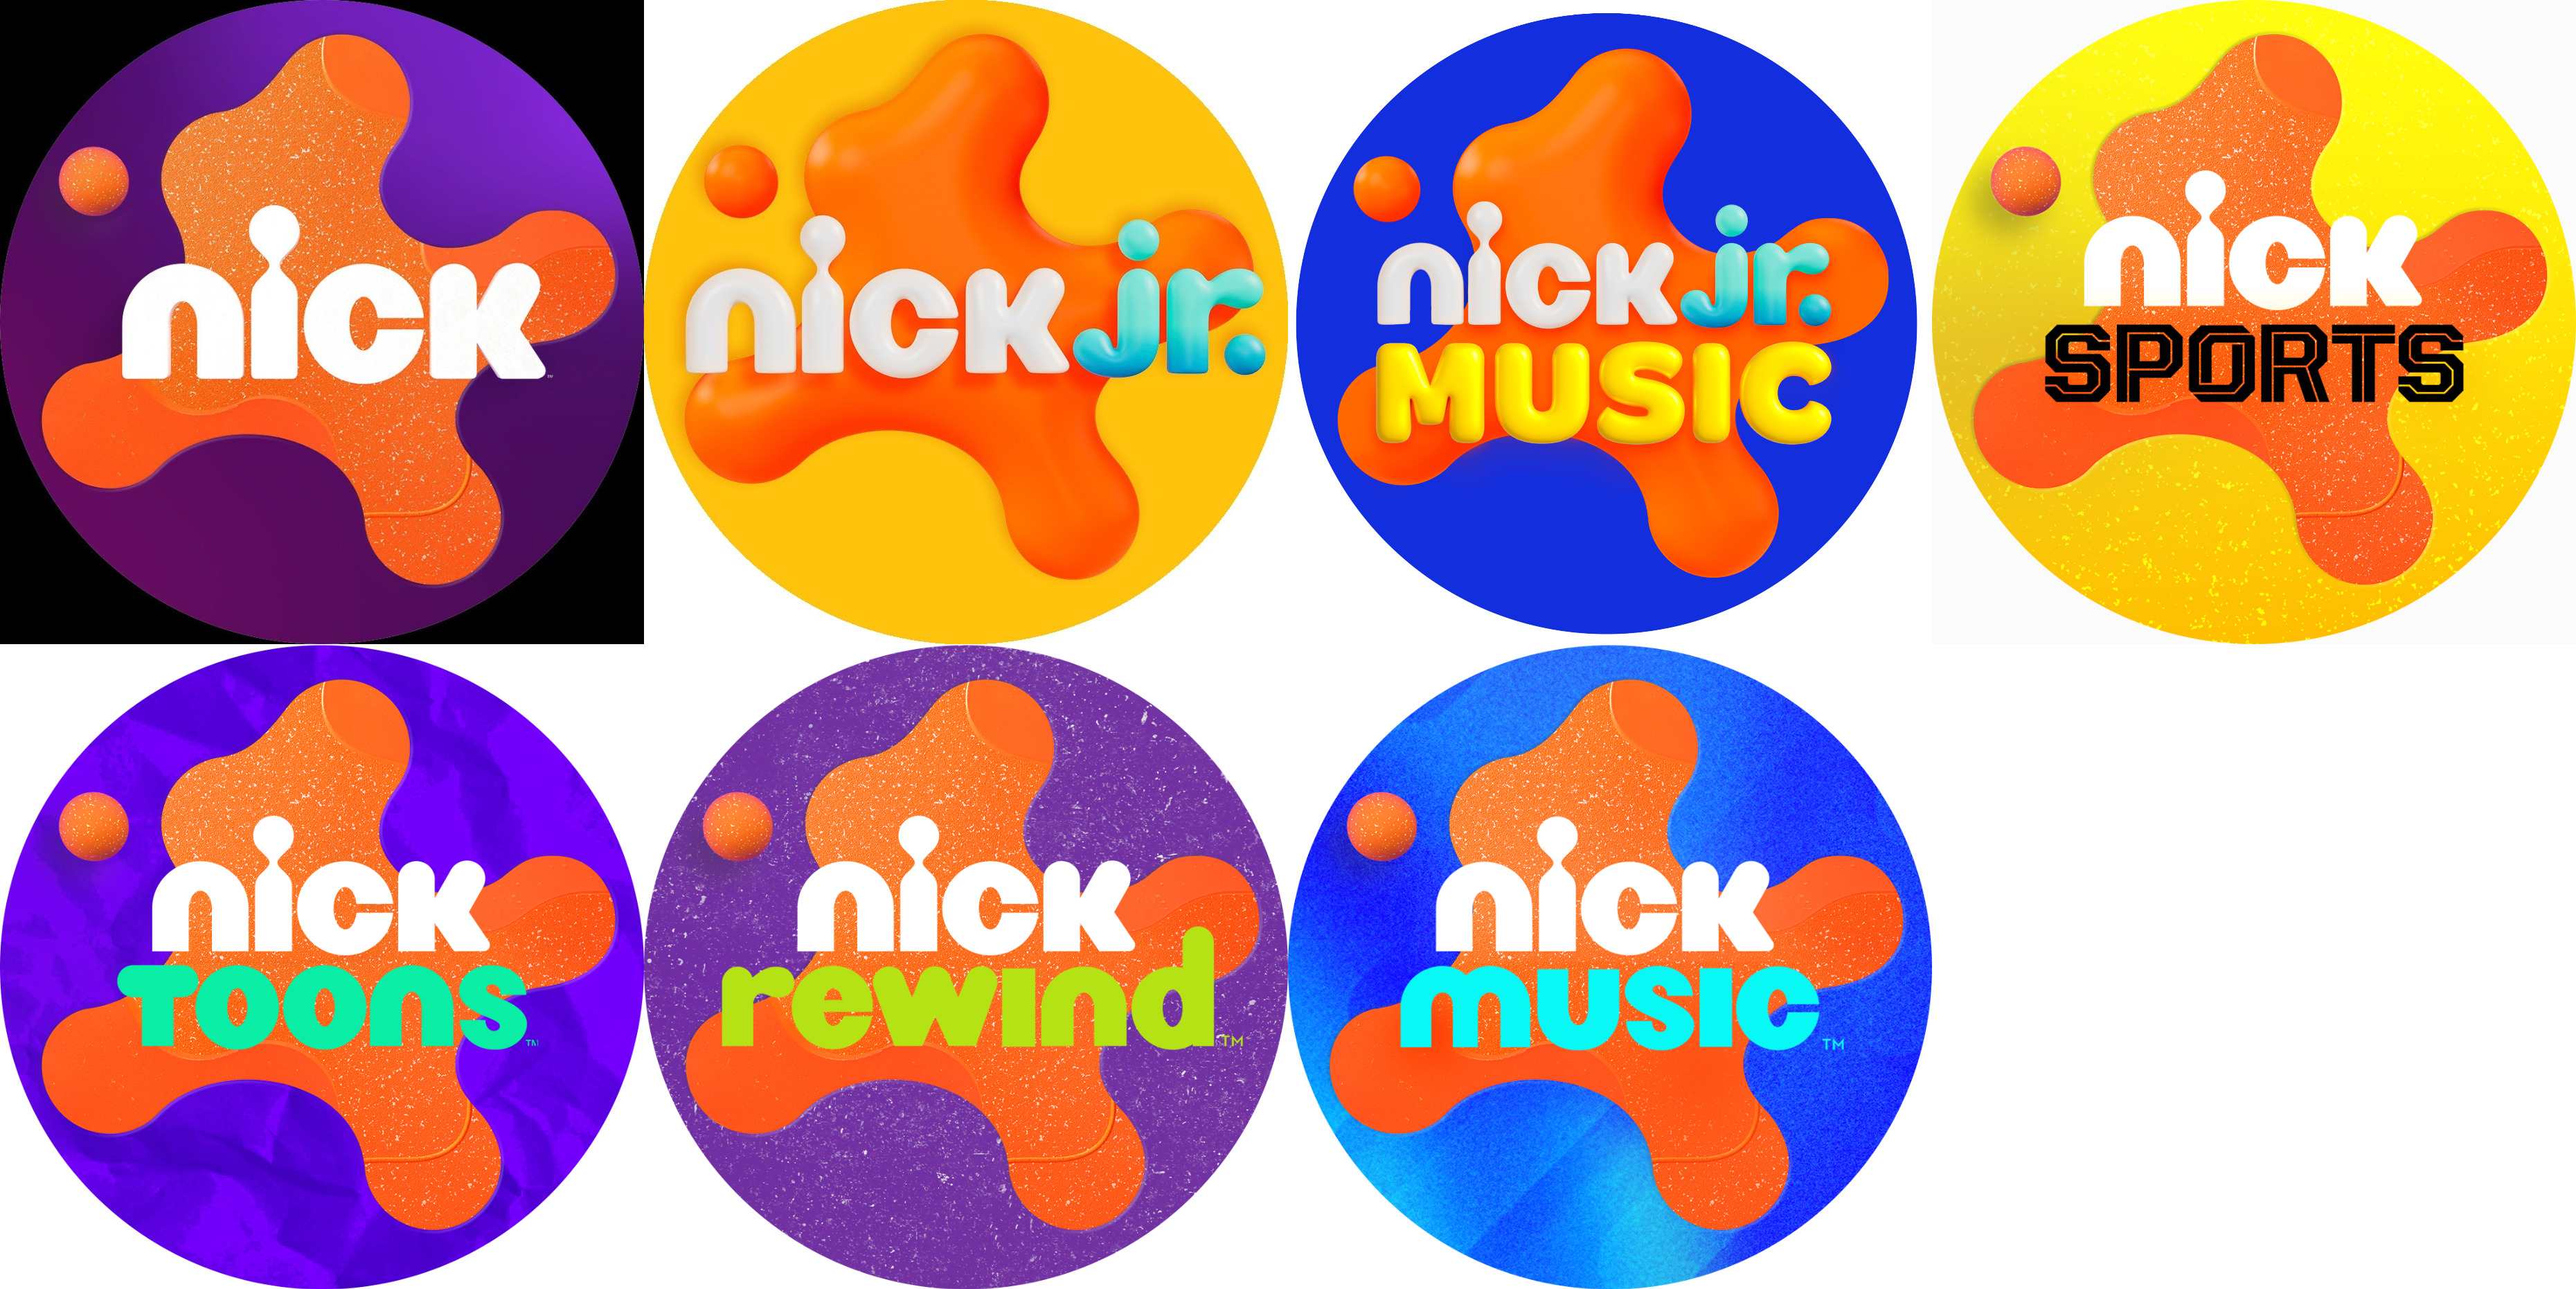 NickALive!: Nickelodeon Rebrands Nick@Nite